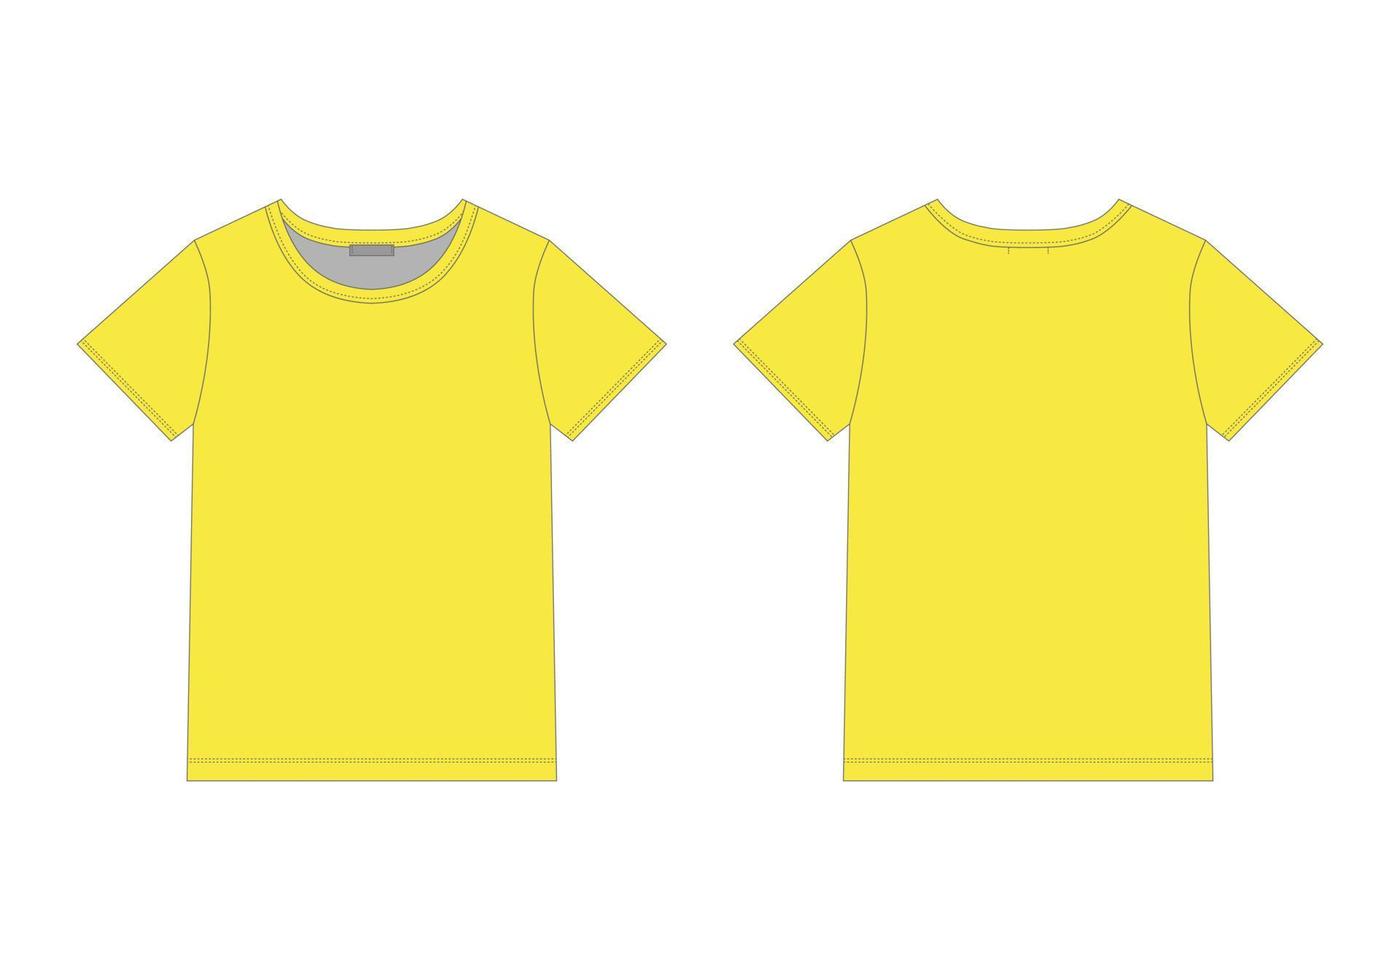 Technical sketch men t shirt in yellow colors. Unisex underwear top design template. vector